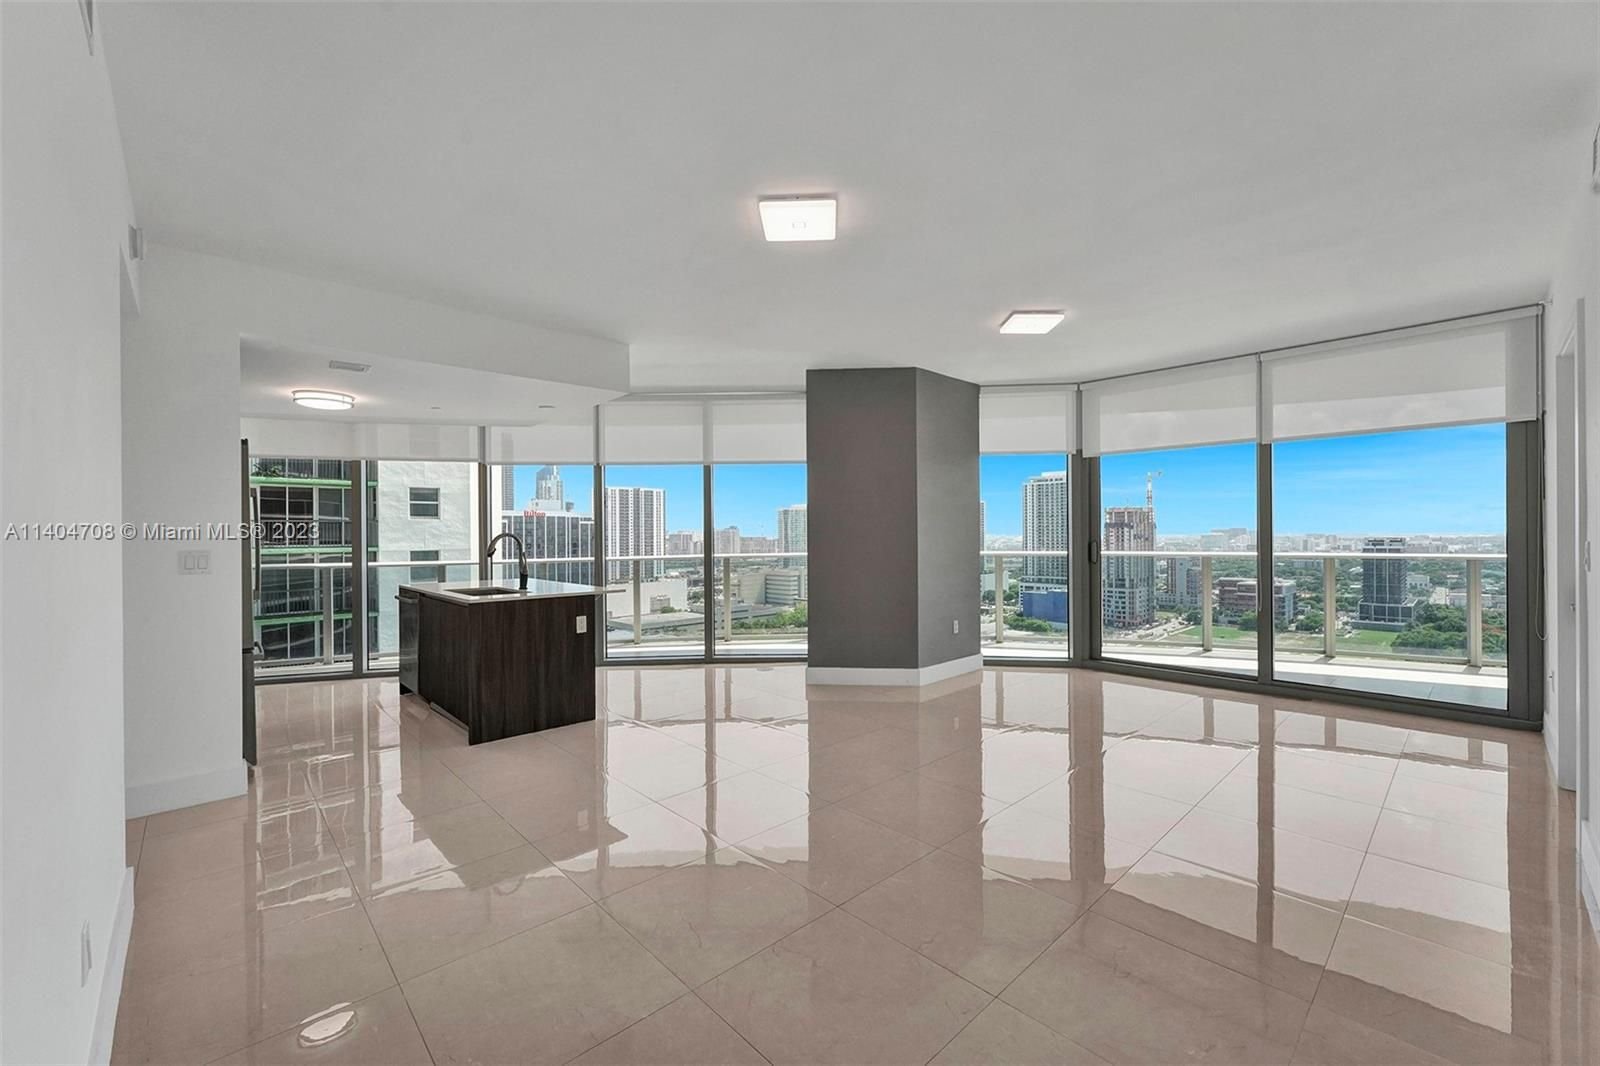 Real estate property located at 488 18th St #2500, Miami-Dade County, Miami, FL